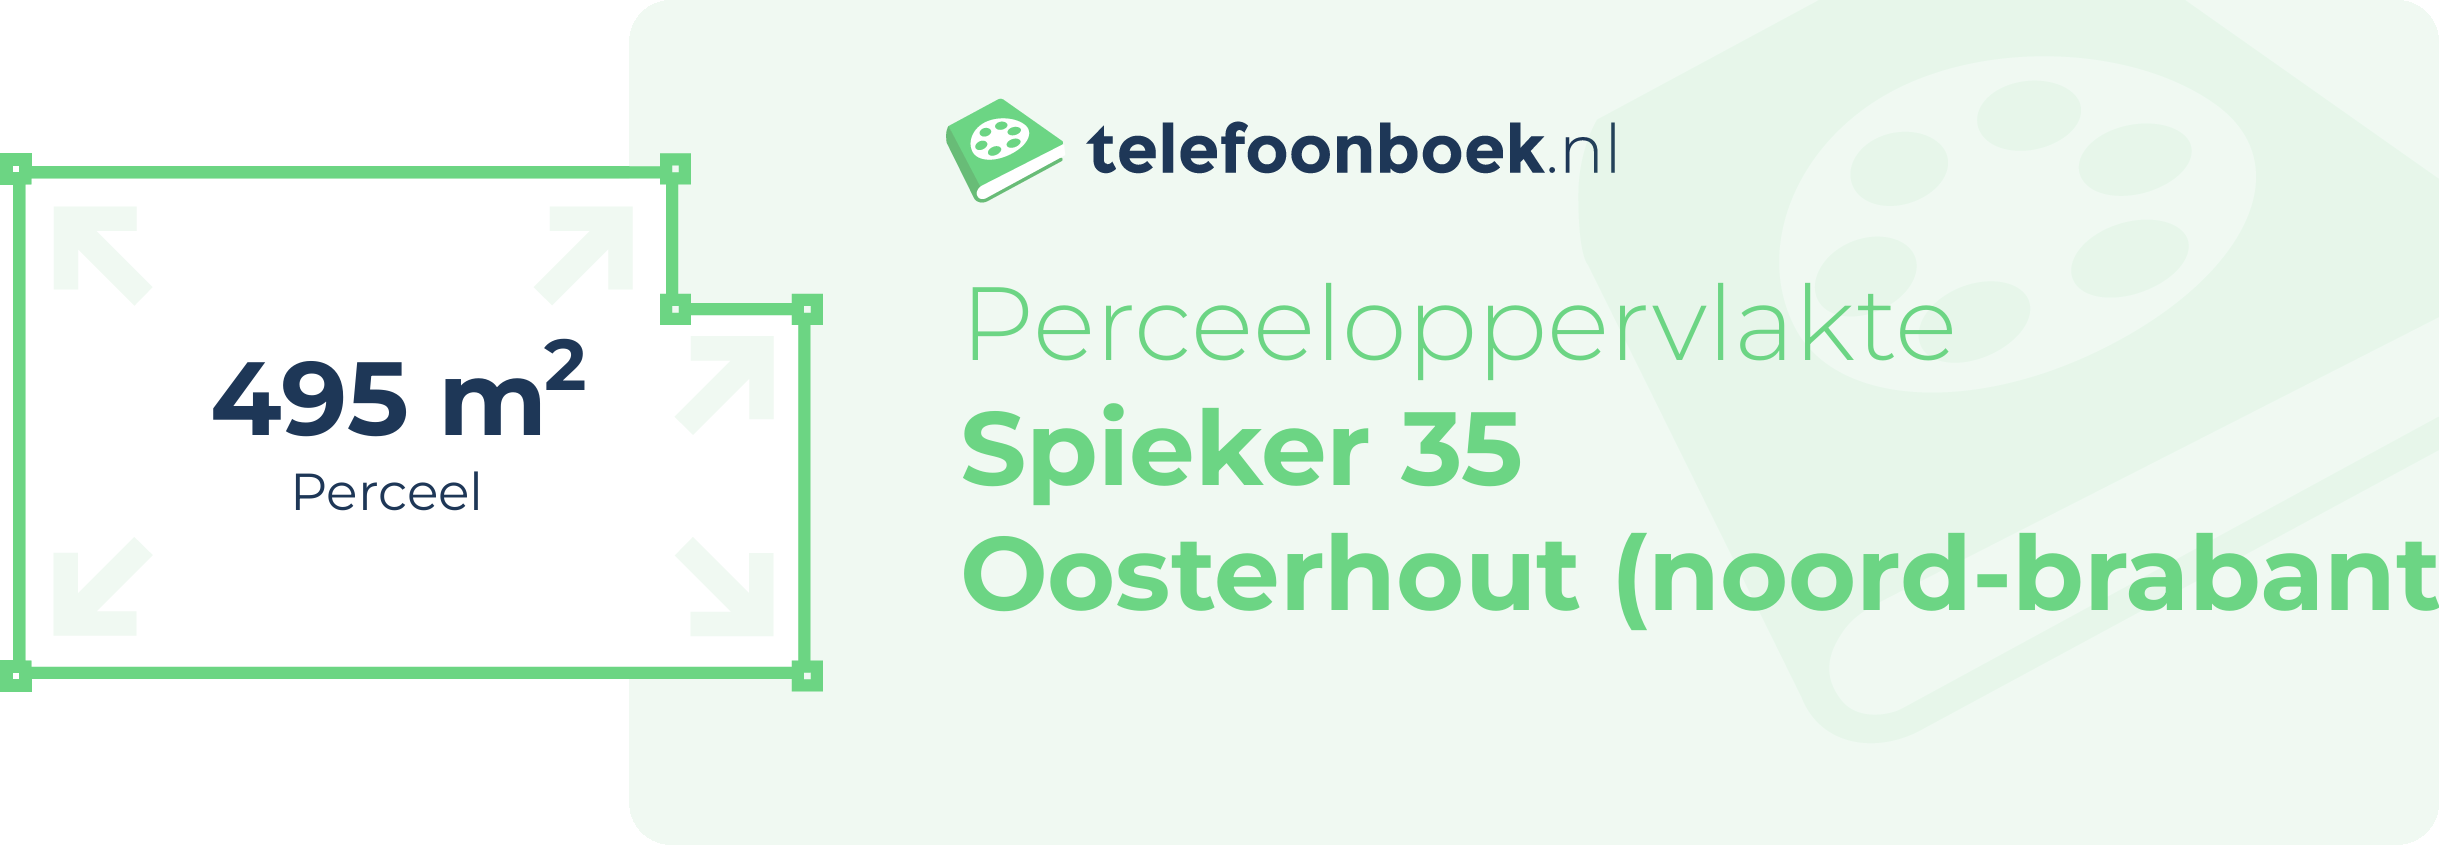 Perceeloppervlakte Spieker 35 Oosterhout (Noord-Brabant)